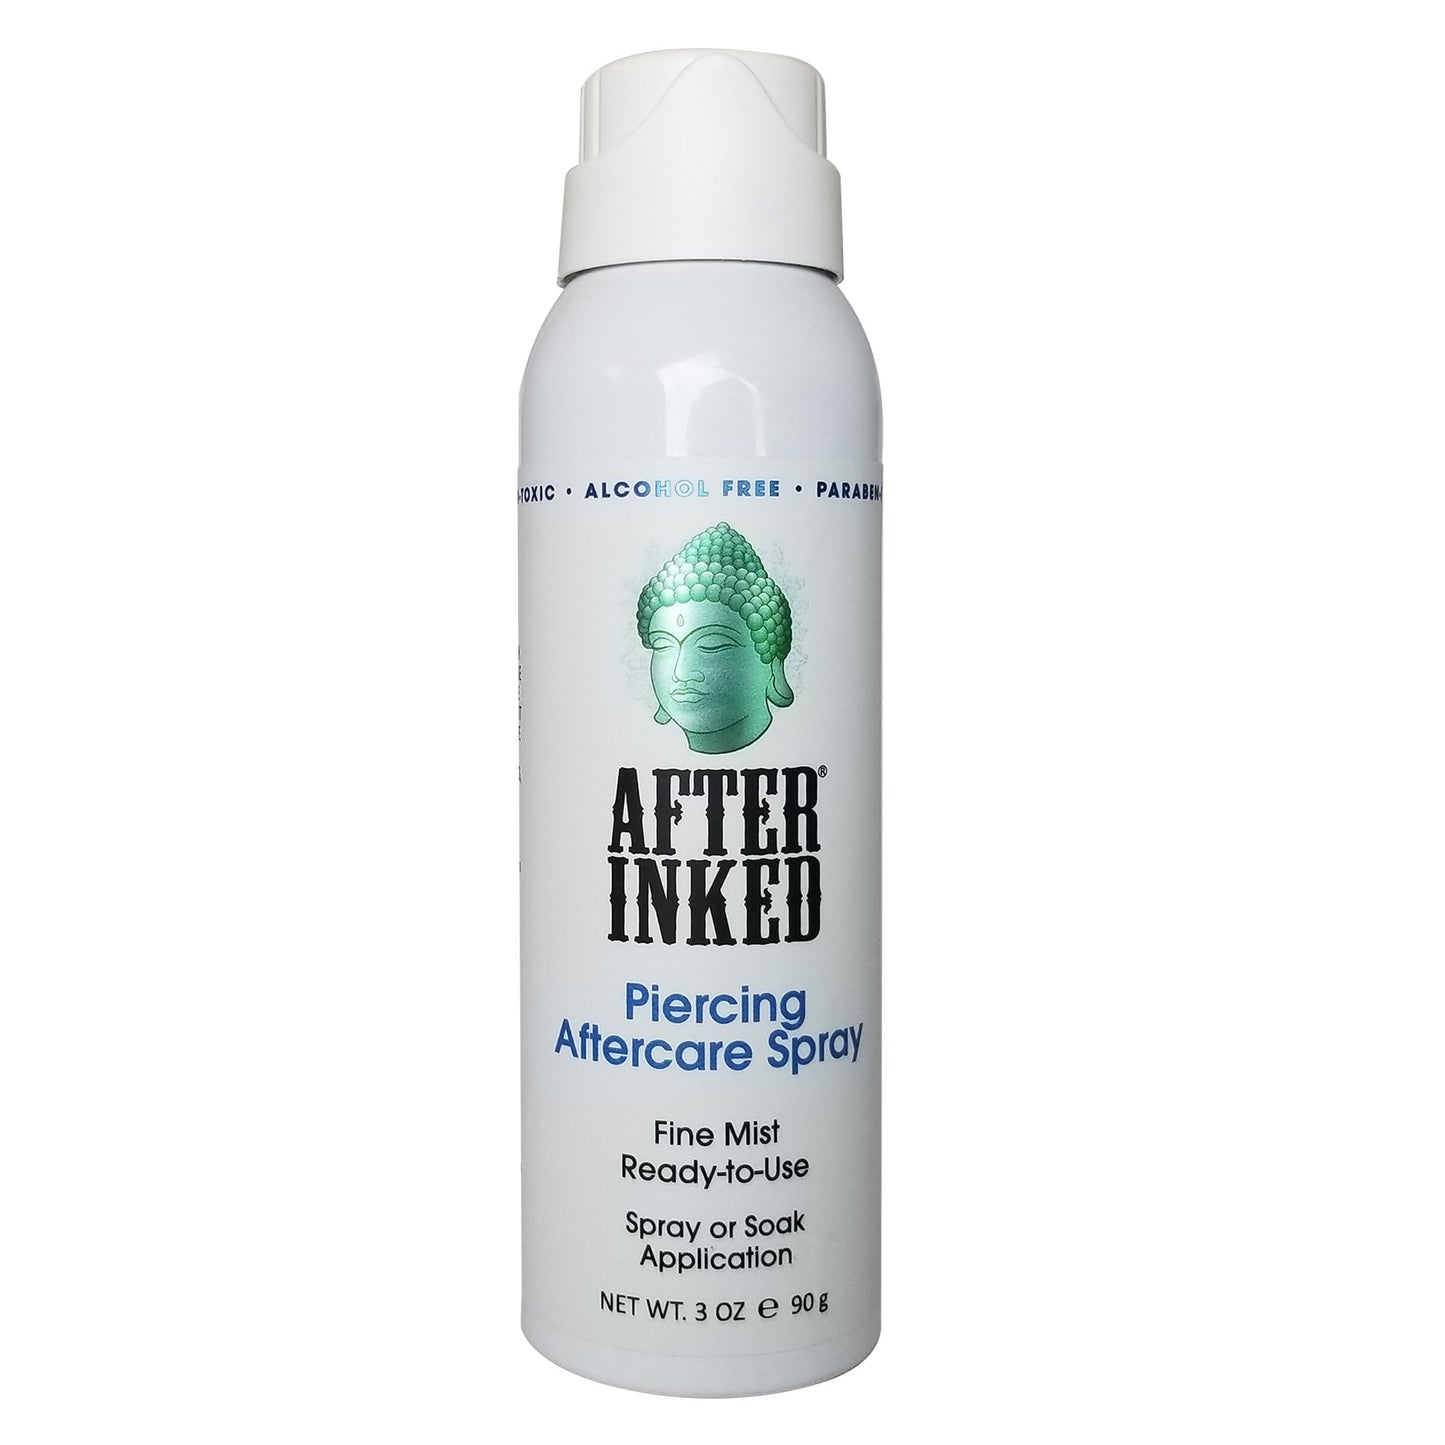 Piercing aftercare spray, fine mist, ready-to-use, spray or soak application, 3oz bottle